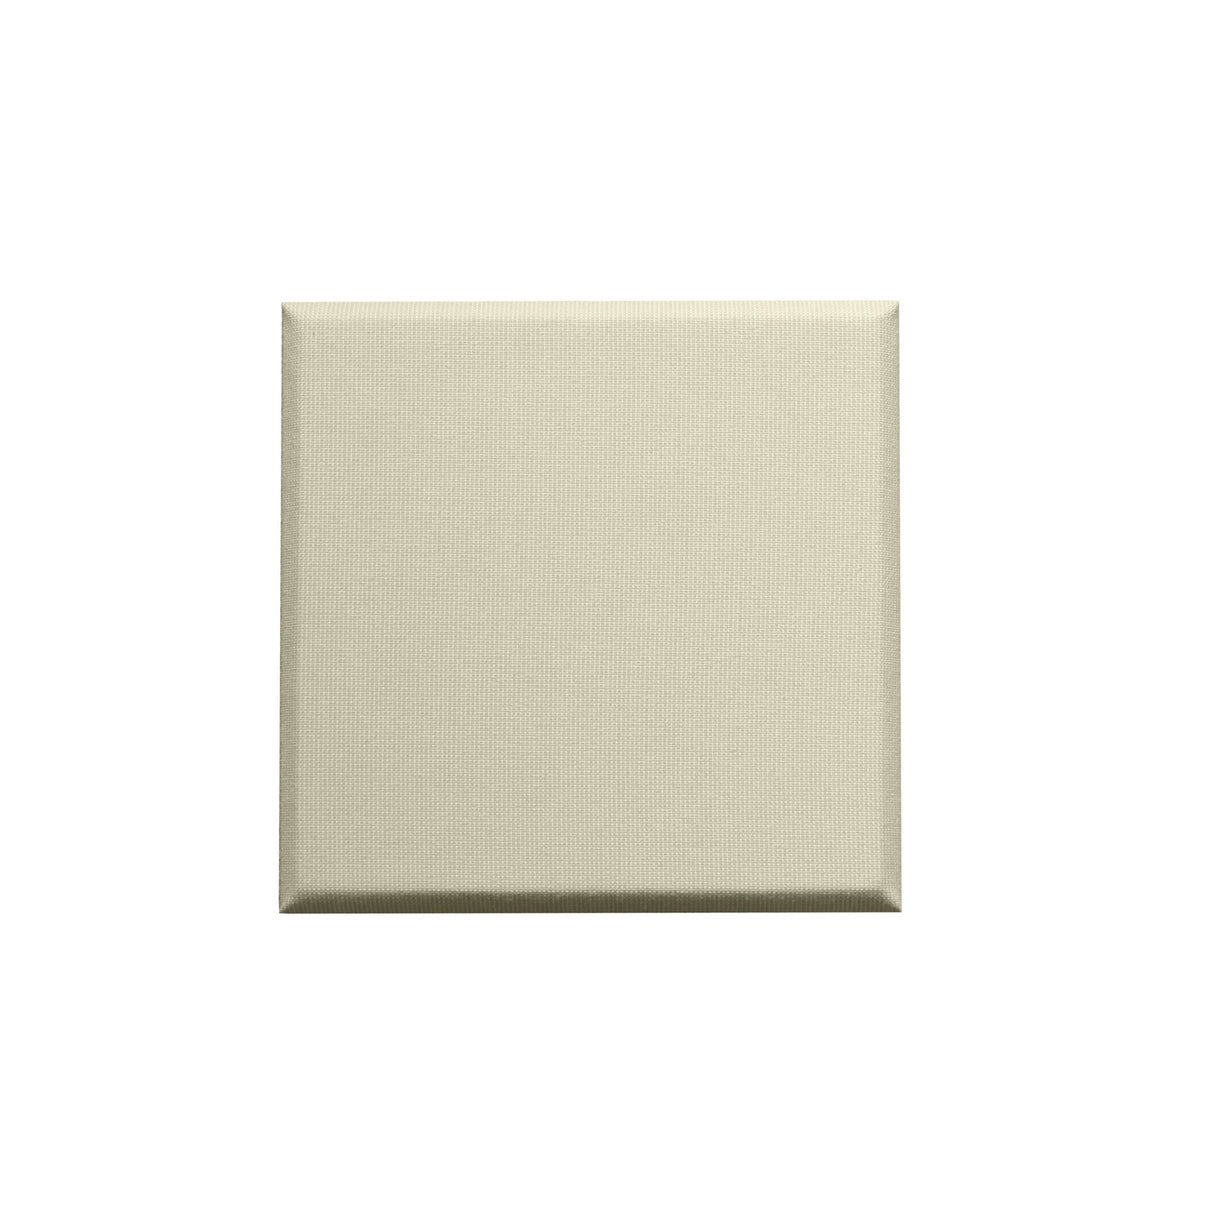 Primacoustic Control Cube 24 x 24 x 2-Inch Acoustic Panels, Beige 12-Set, Beveled Edge